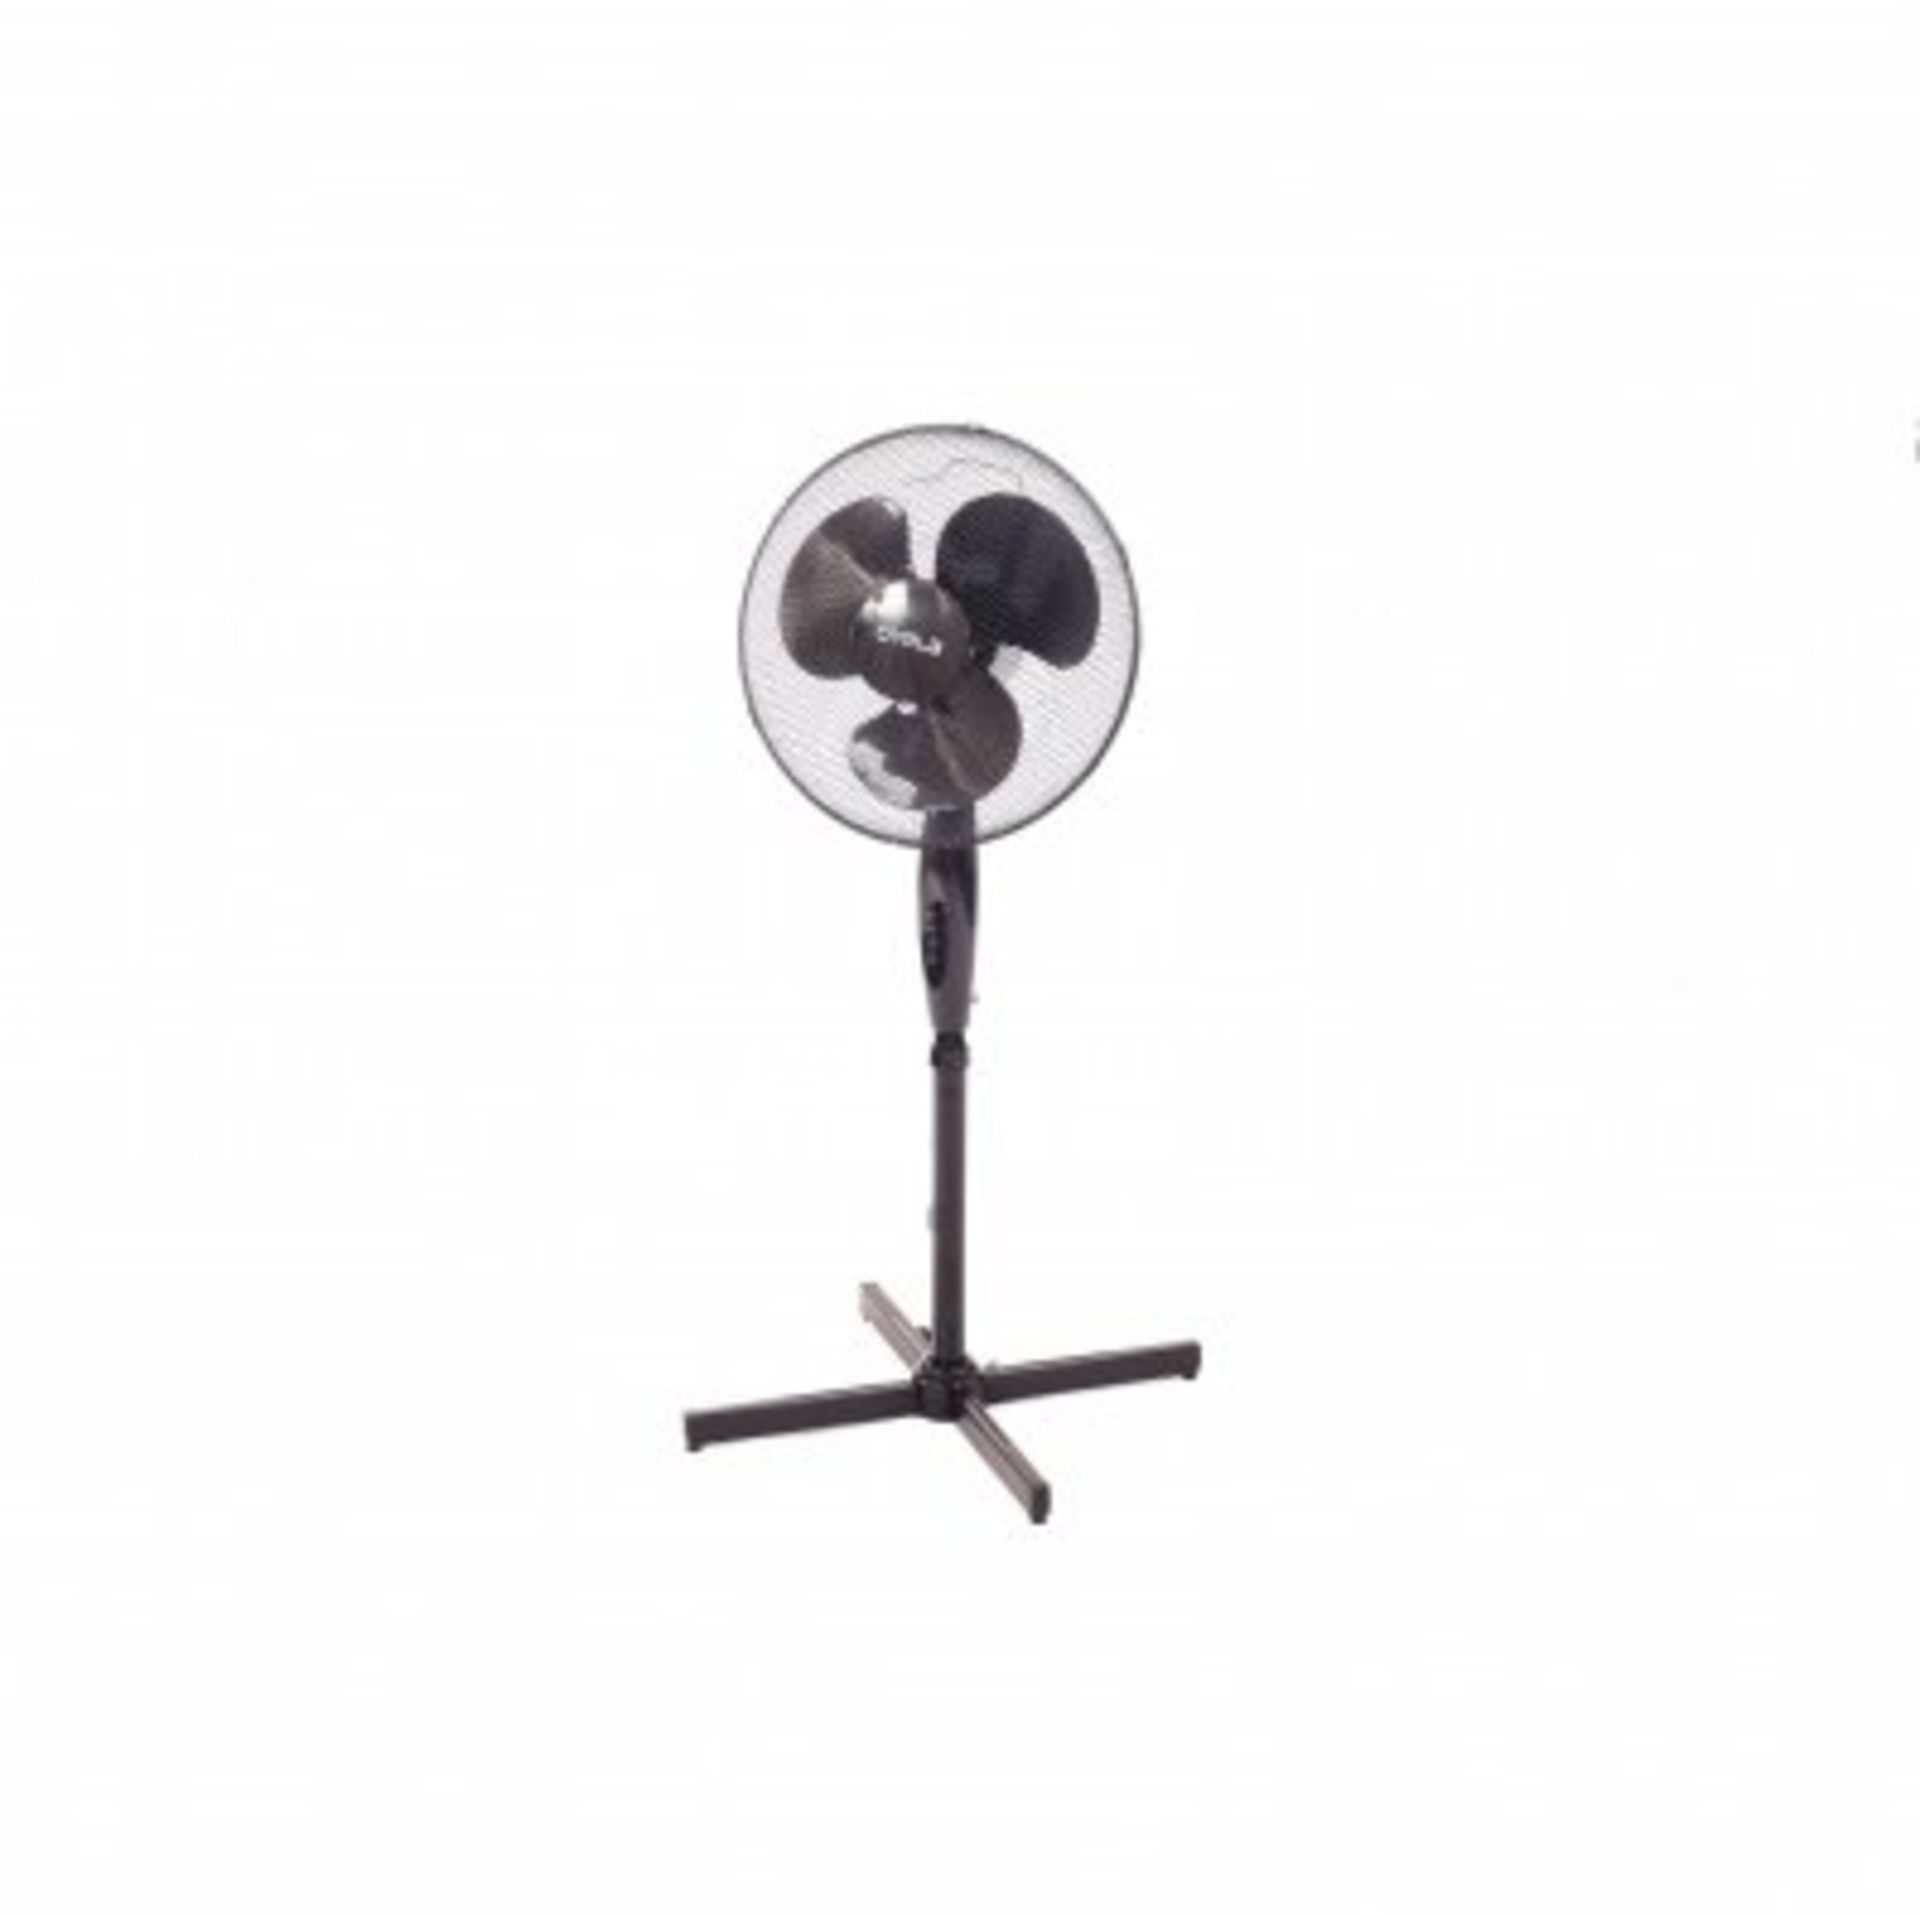 (RU328) 16" Oscillating Black Extendable Free Standing Tower Pedestal Cooling Fan The fan ...